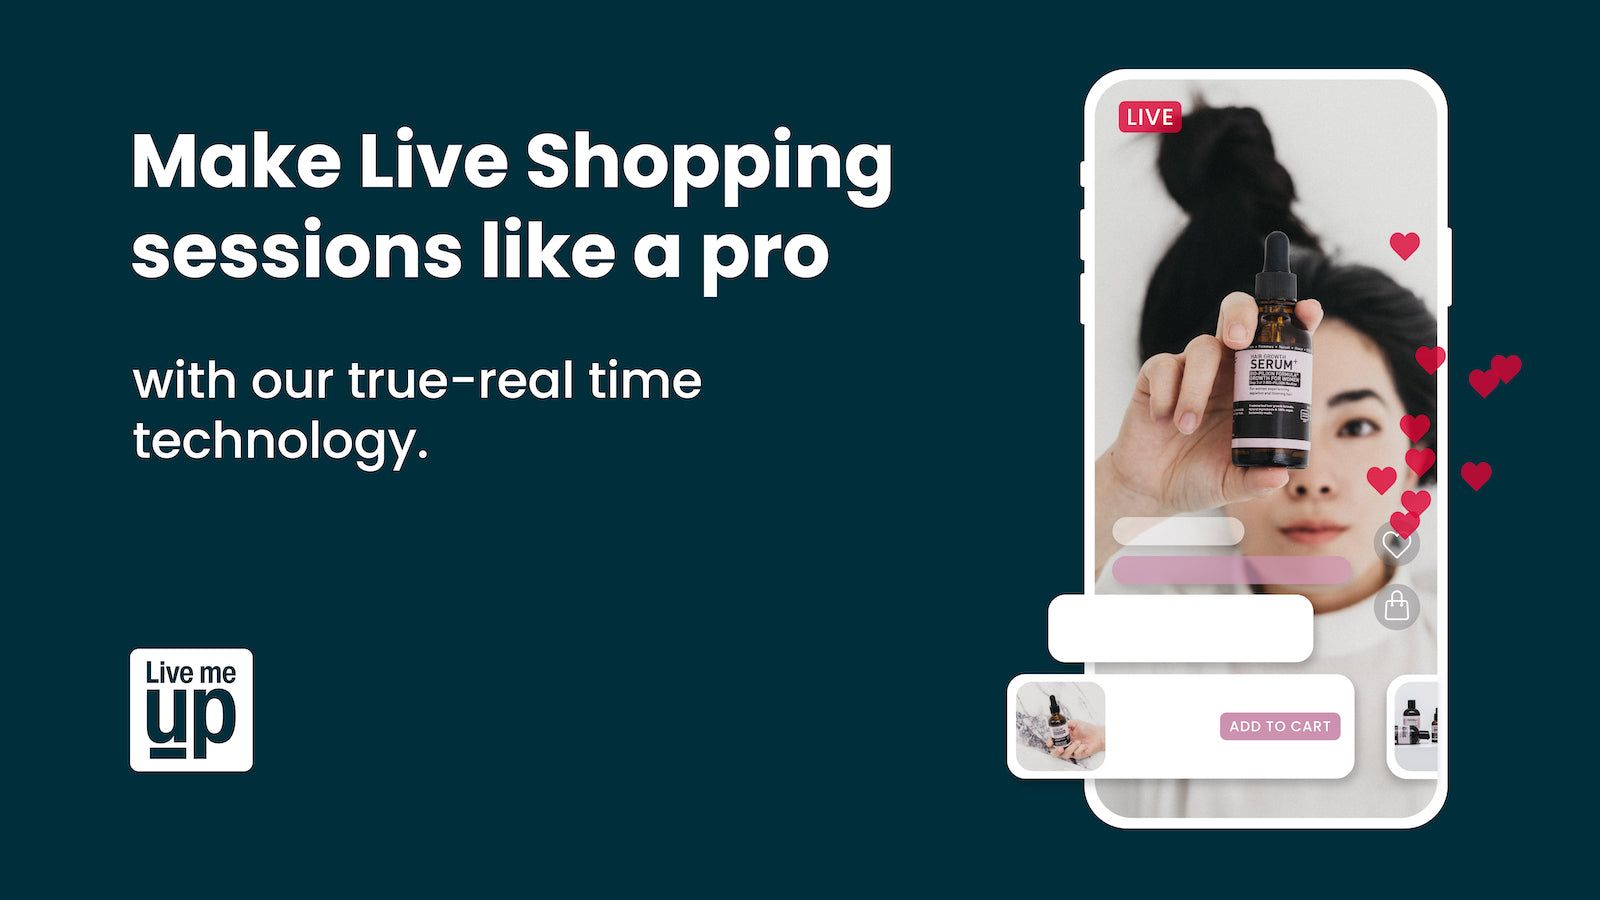 Make Live shopping sessions like a pro